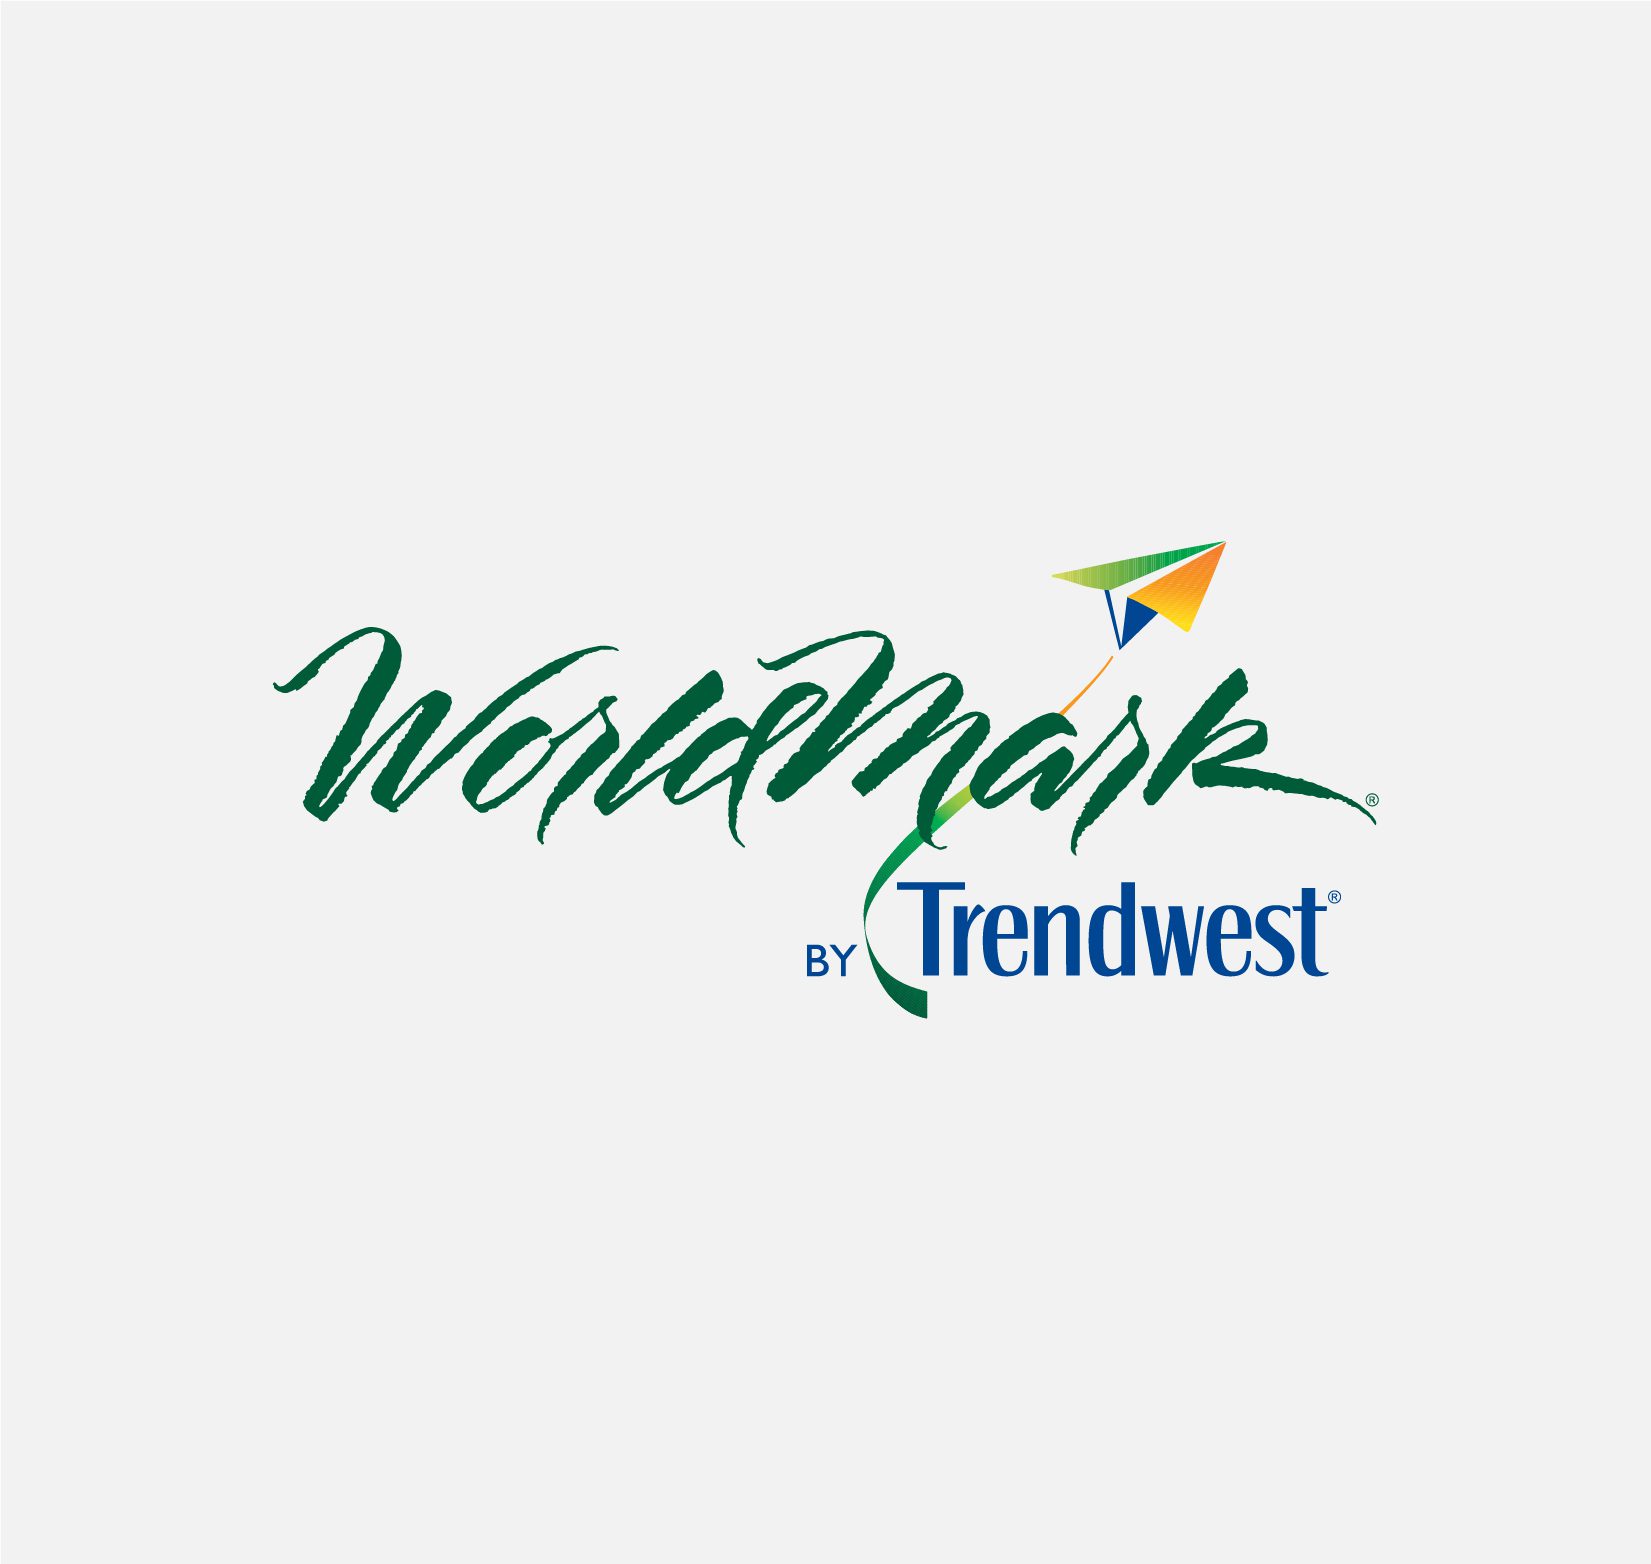 WorldMark Trendwest logo